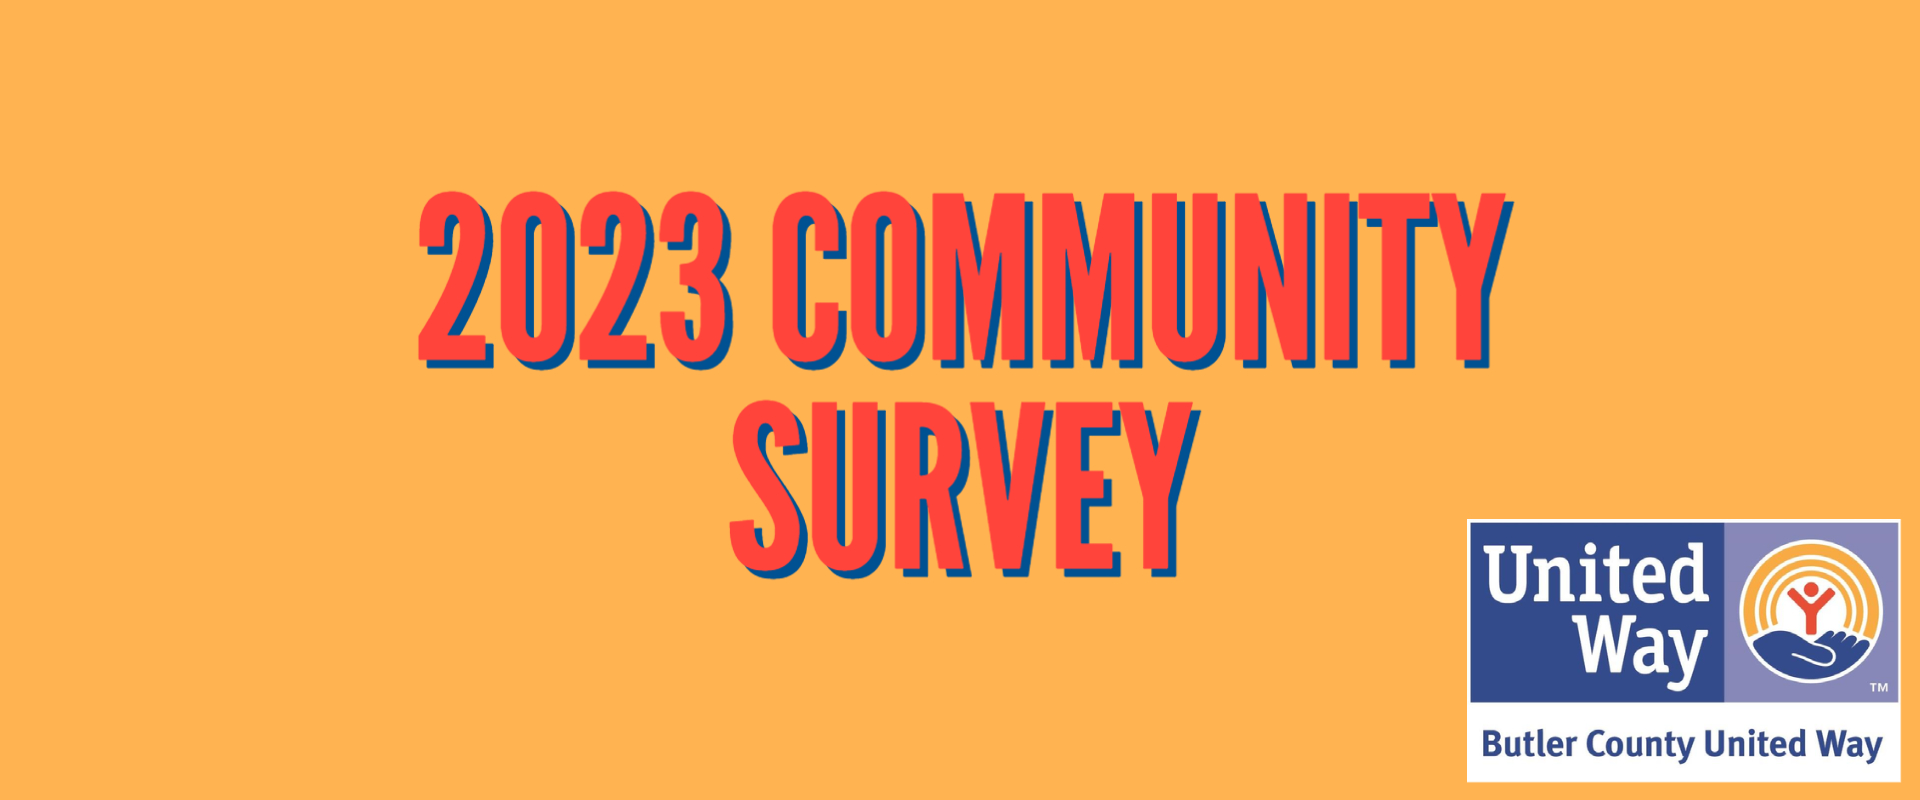 2023 Community Survey